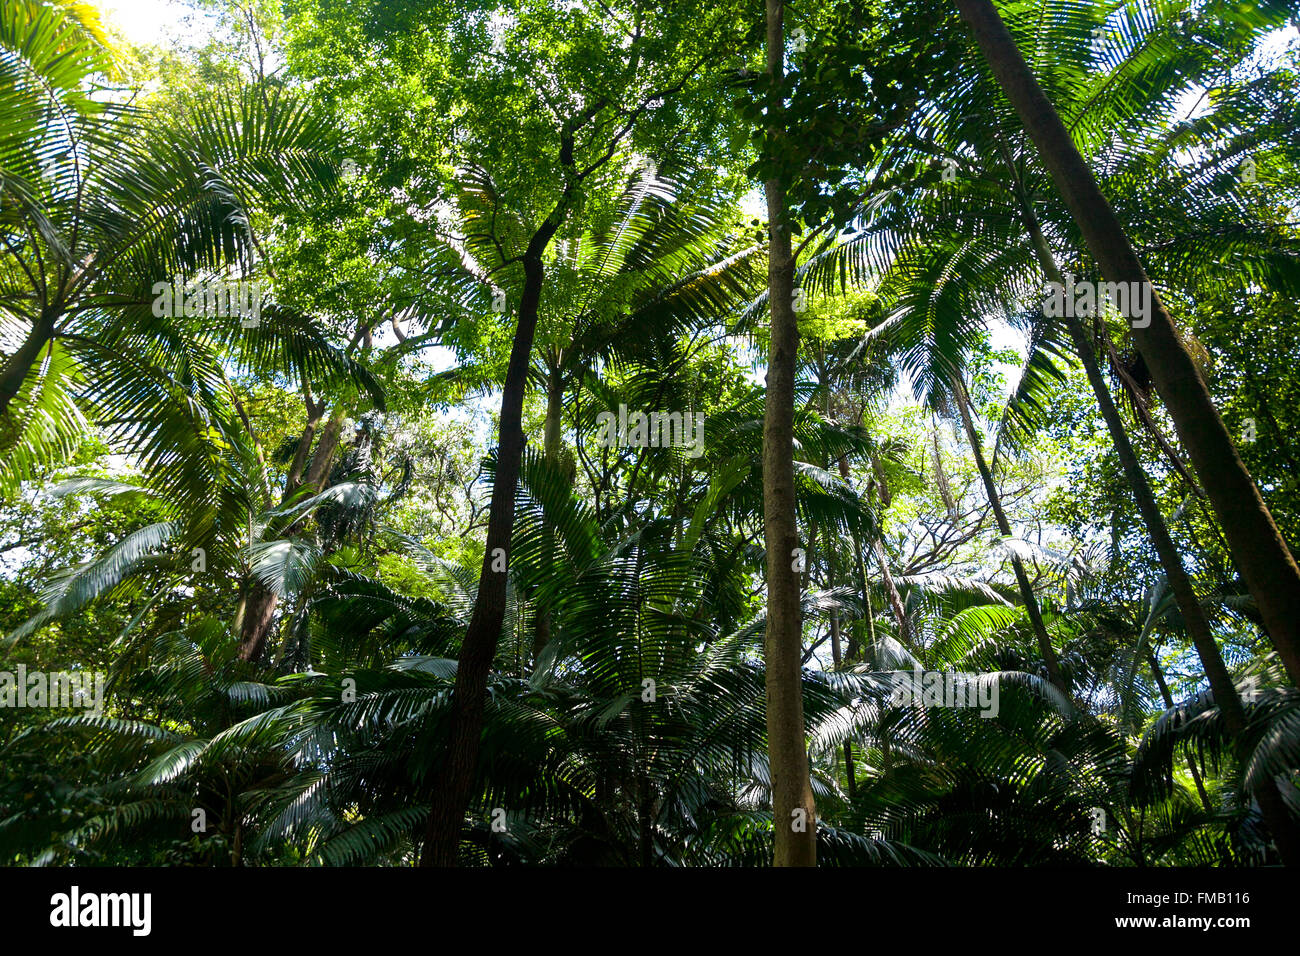 Jungle of palm trees (Brazil) Stock Photo